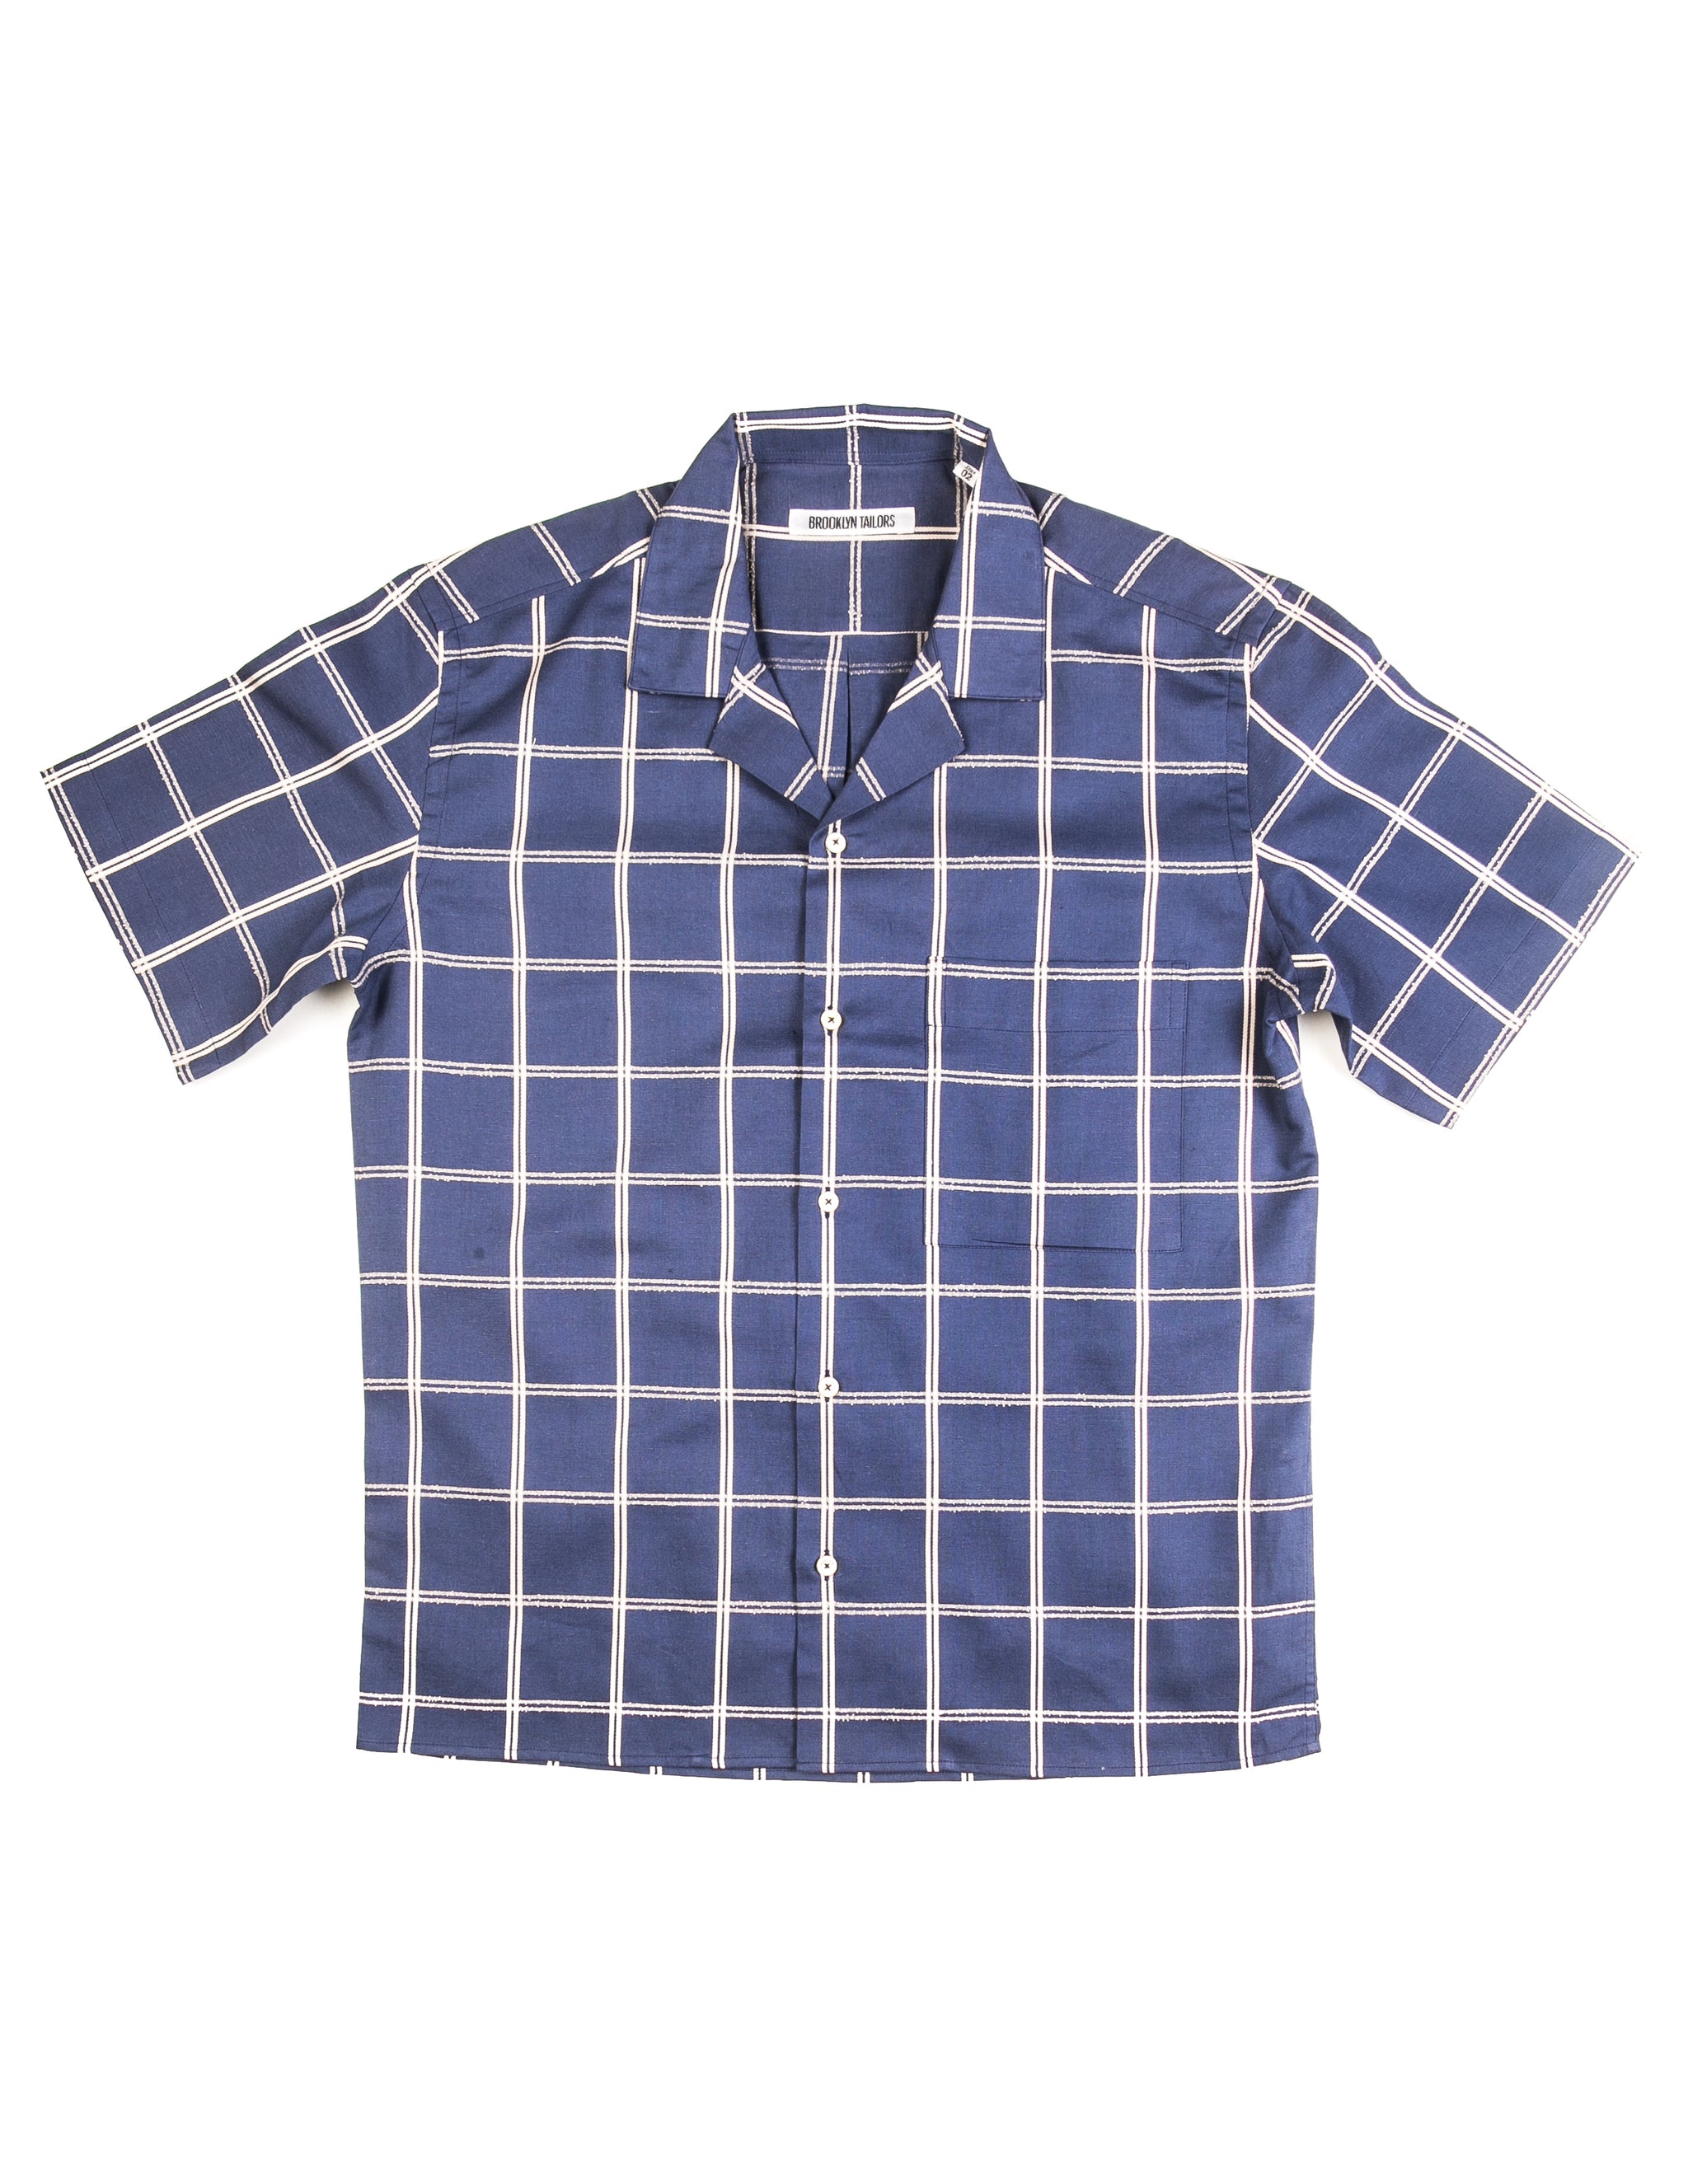 BKT18 Camp Shirt in Blue Windowpane – Brooklyn Tailors